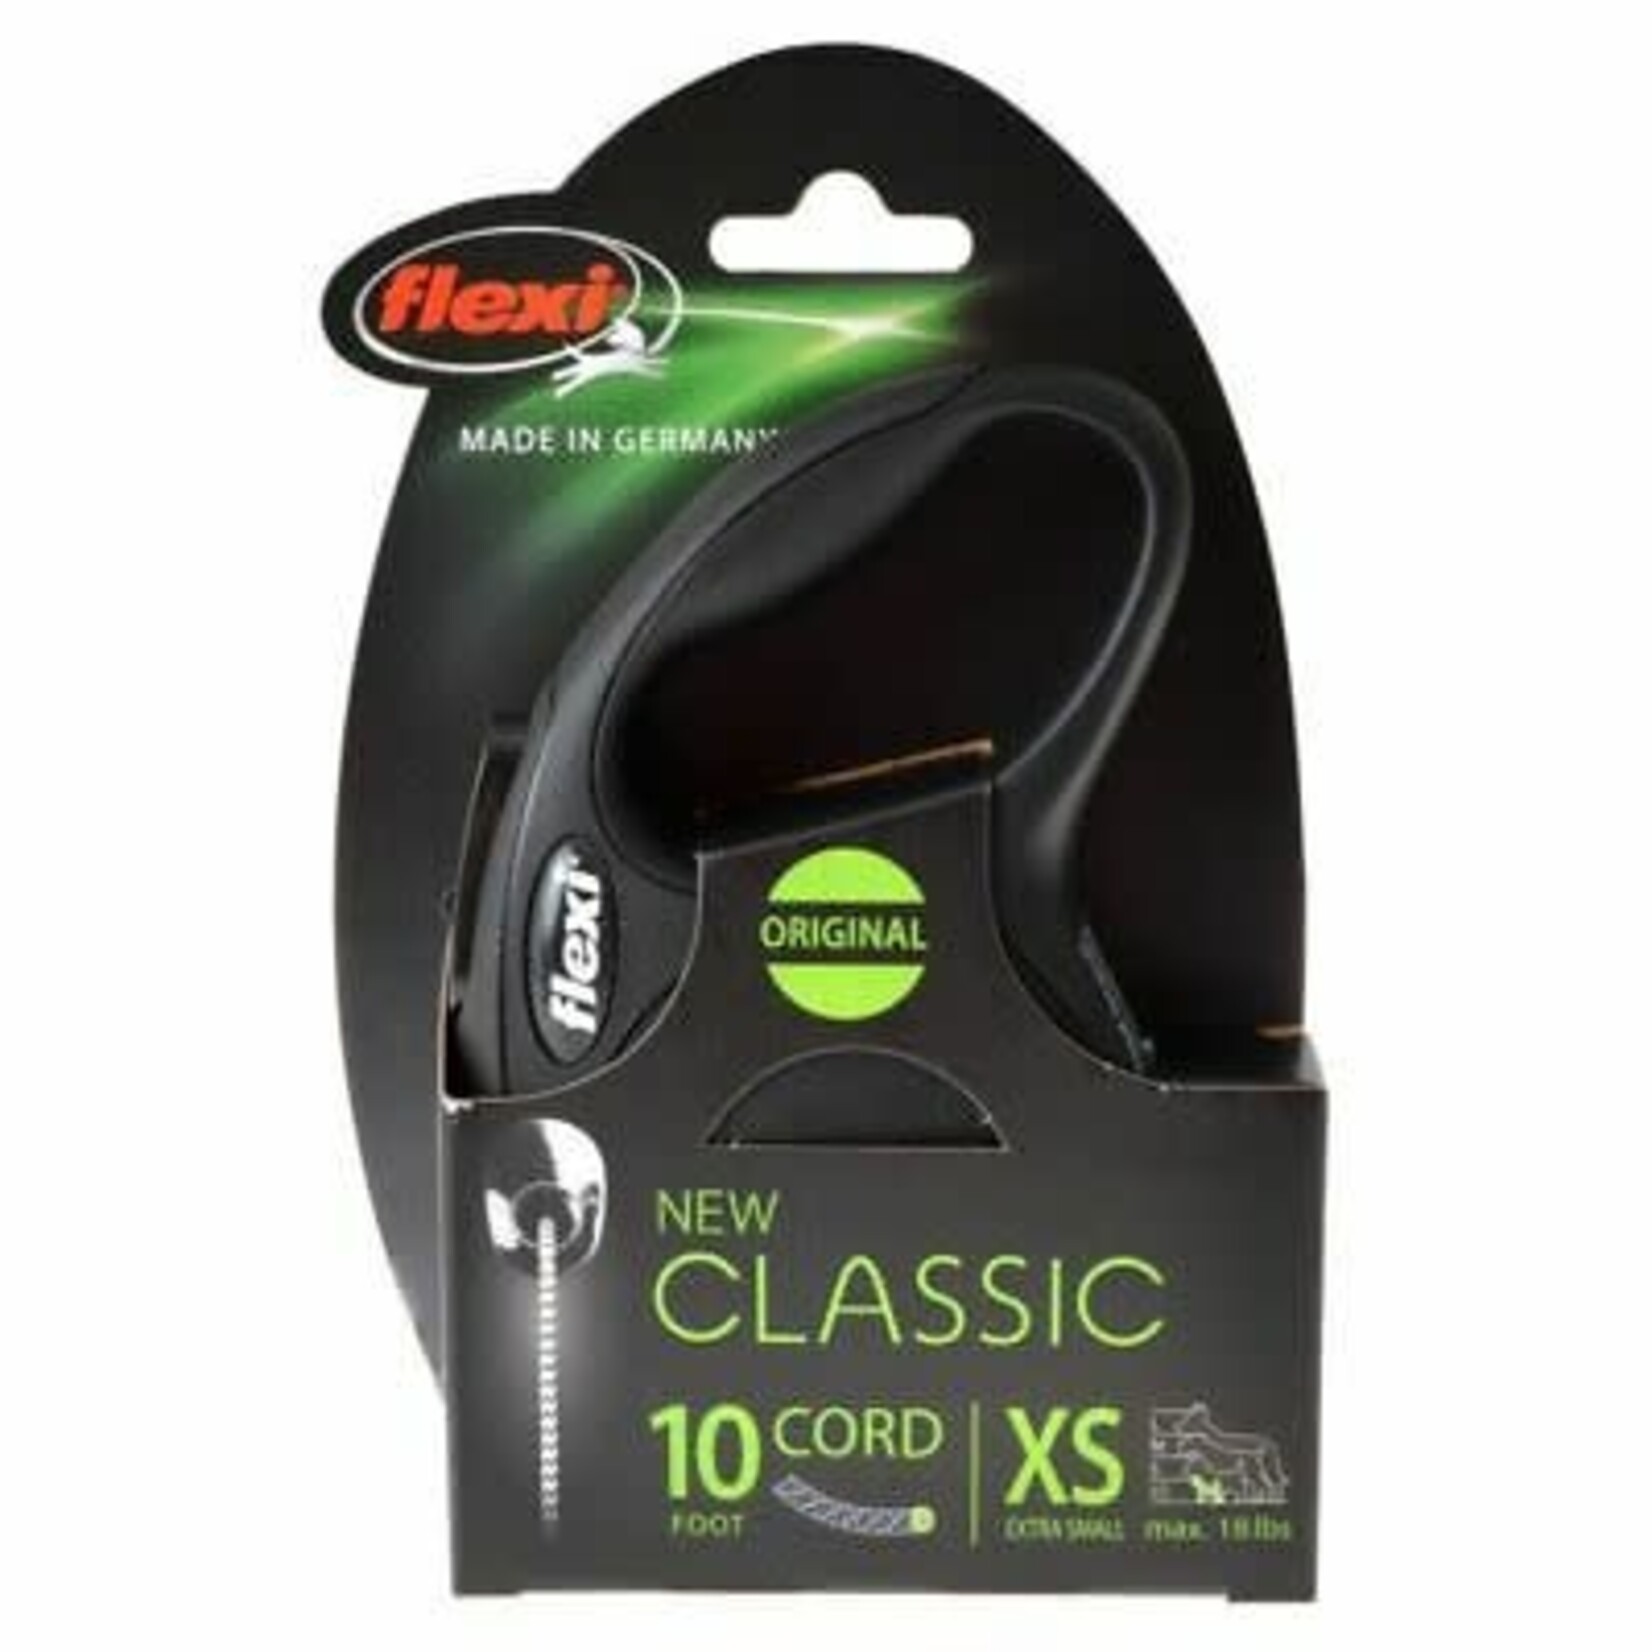 Flexi XS Classic Cord Black